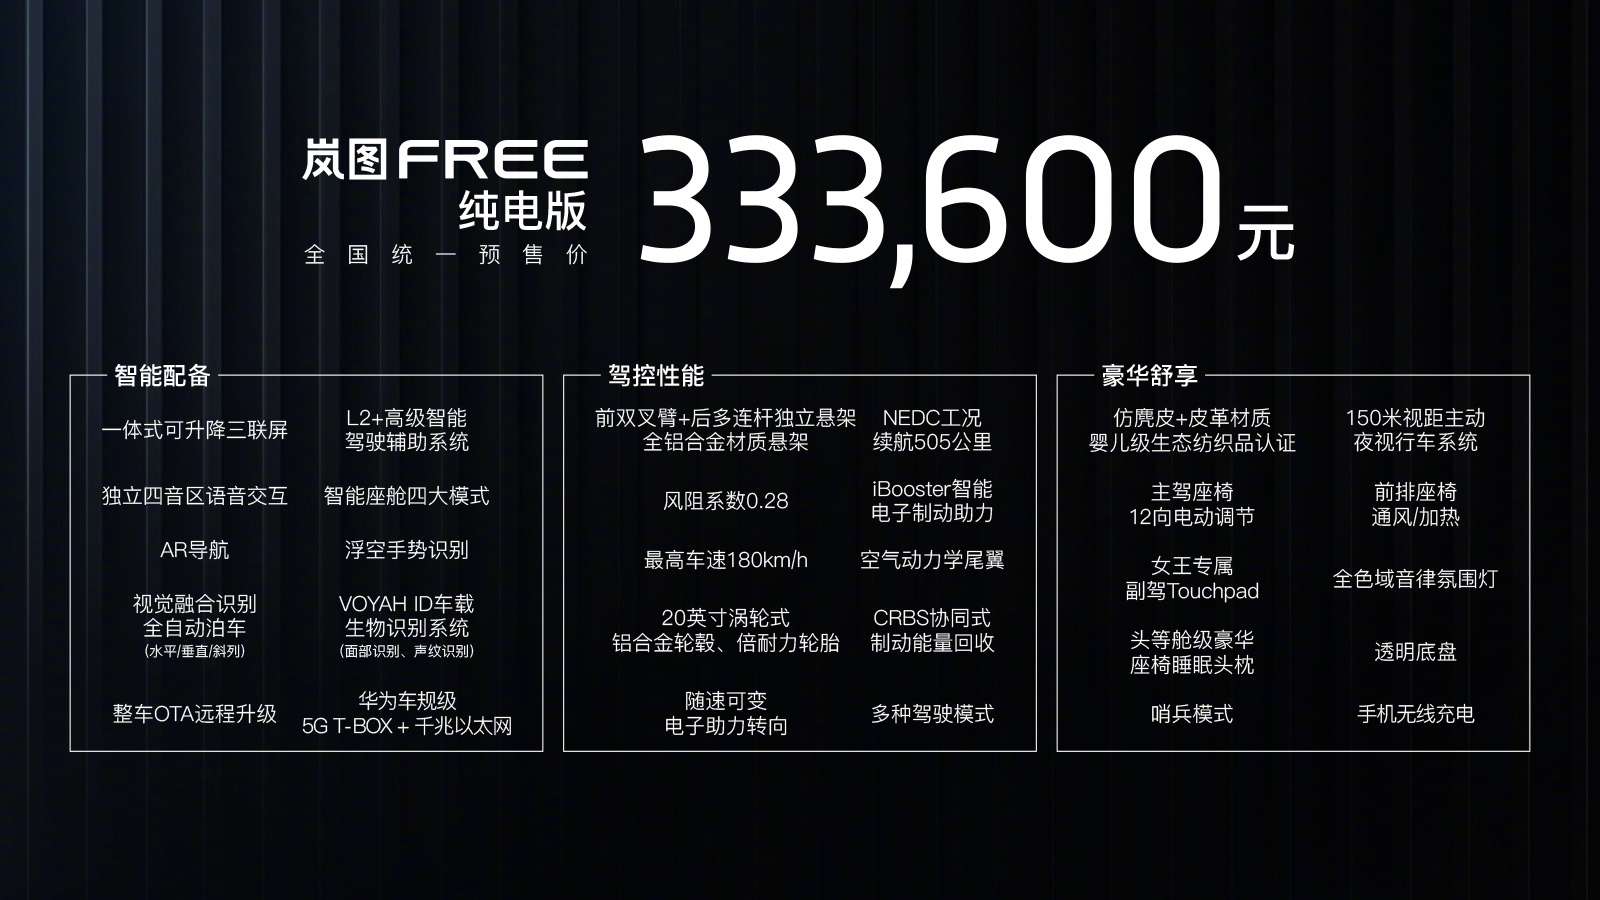 (Pure electric version pre-sale price is 333,600 RMB)